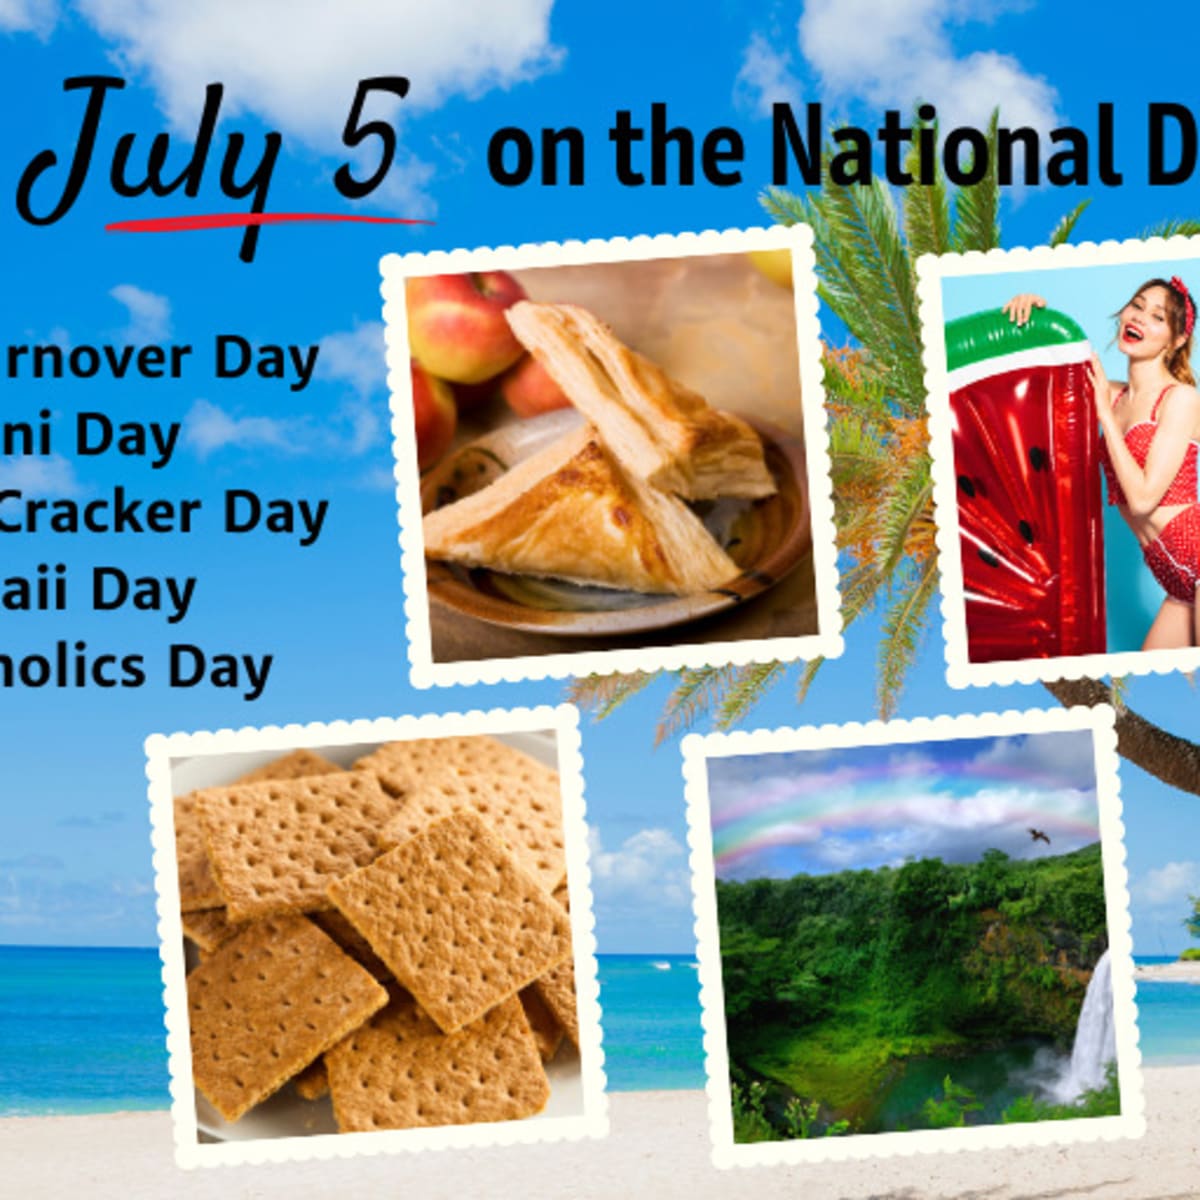 National Bikini Day (July 5th)